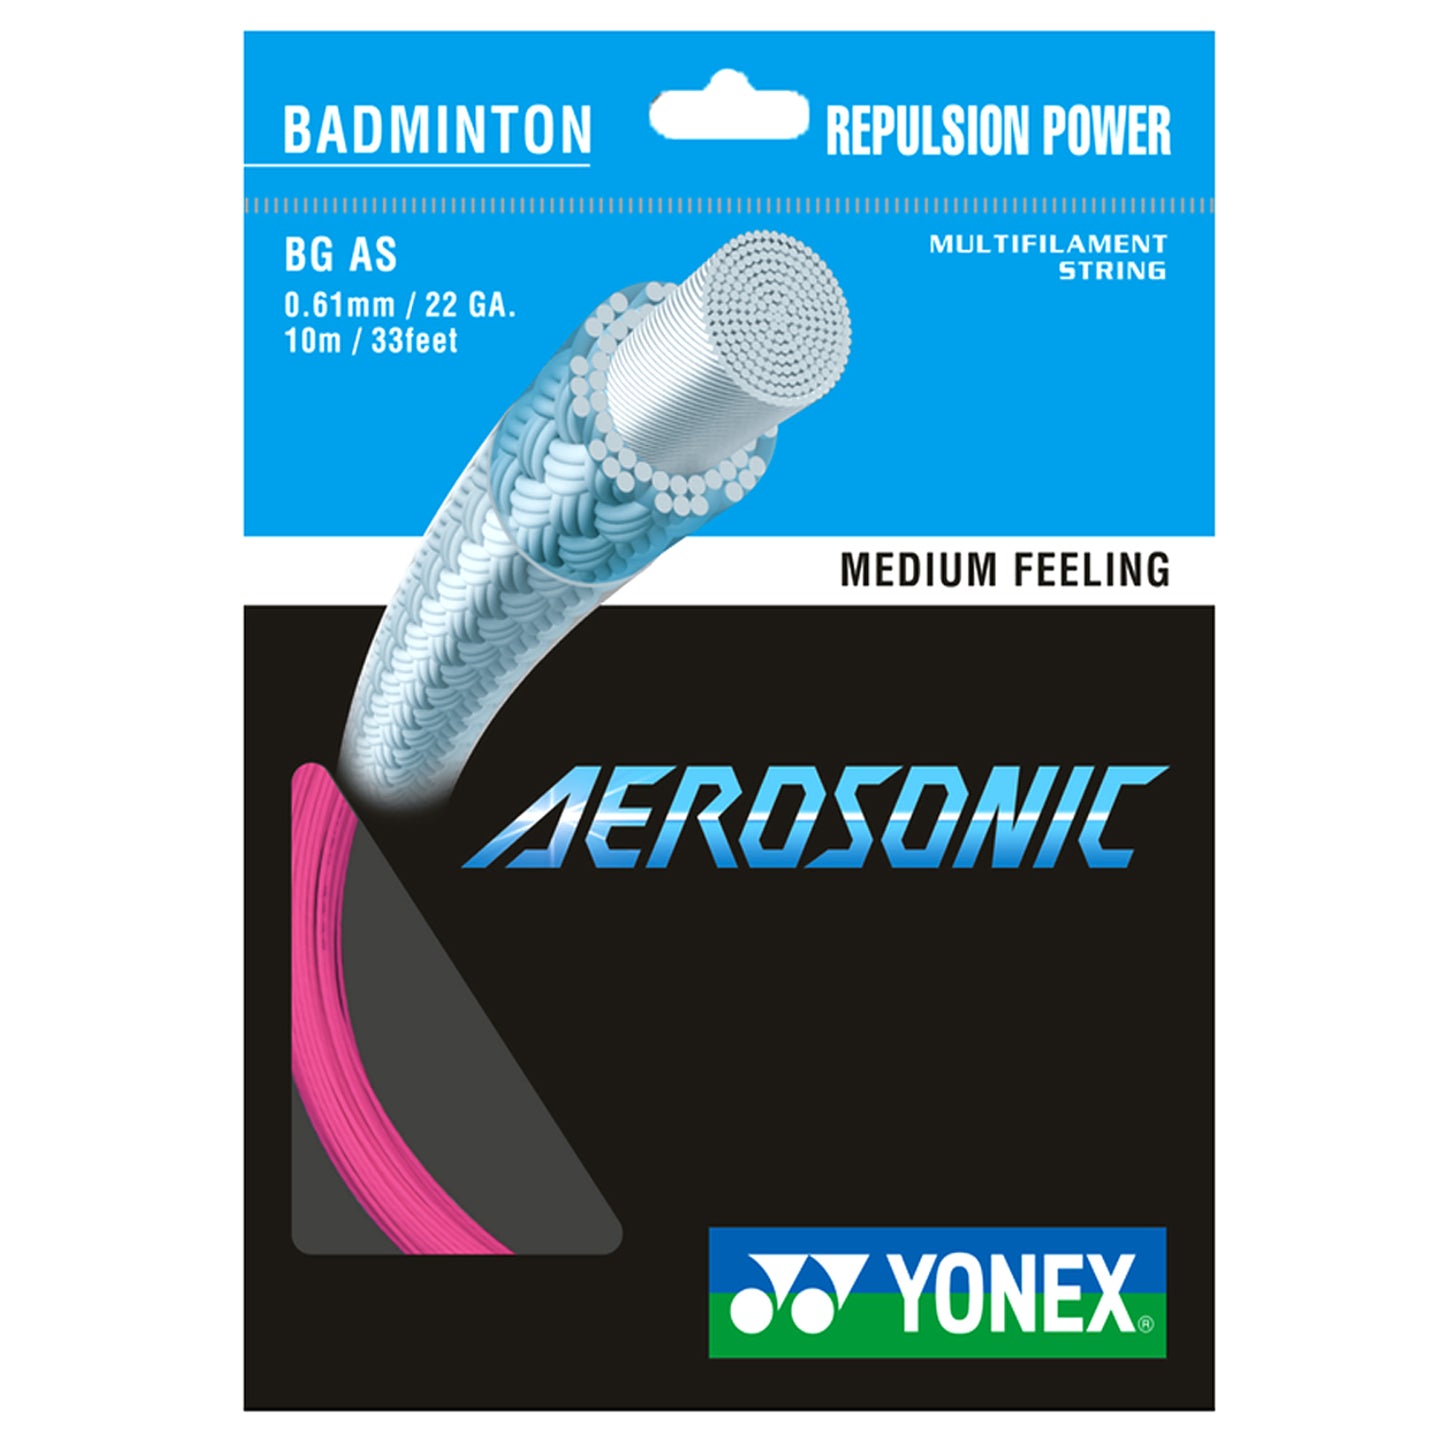 Yonex Aerosonic Badminton String - Best Price online Prokicksports.com